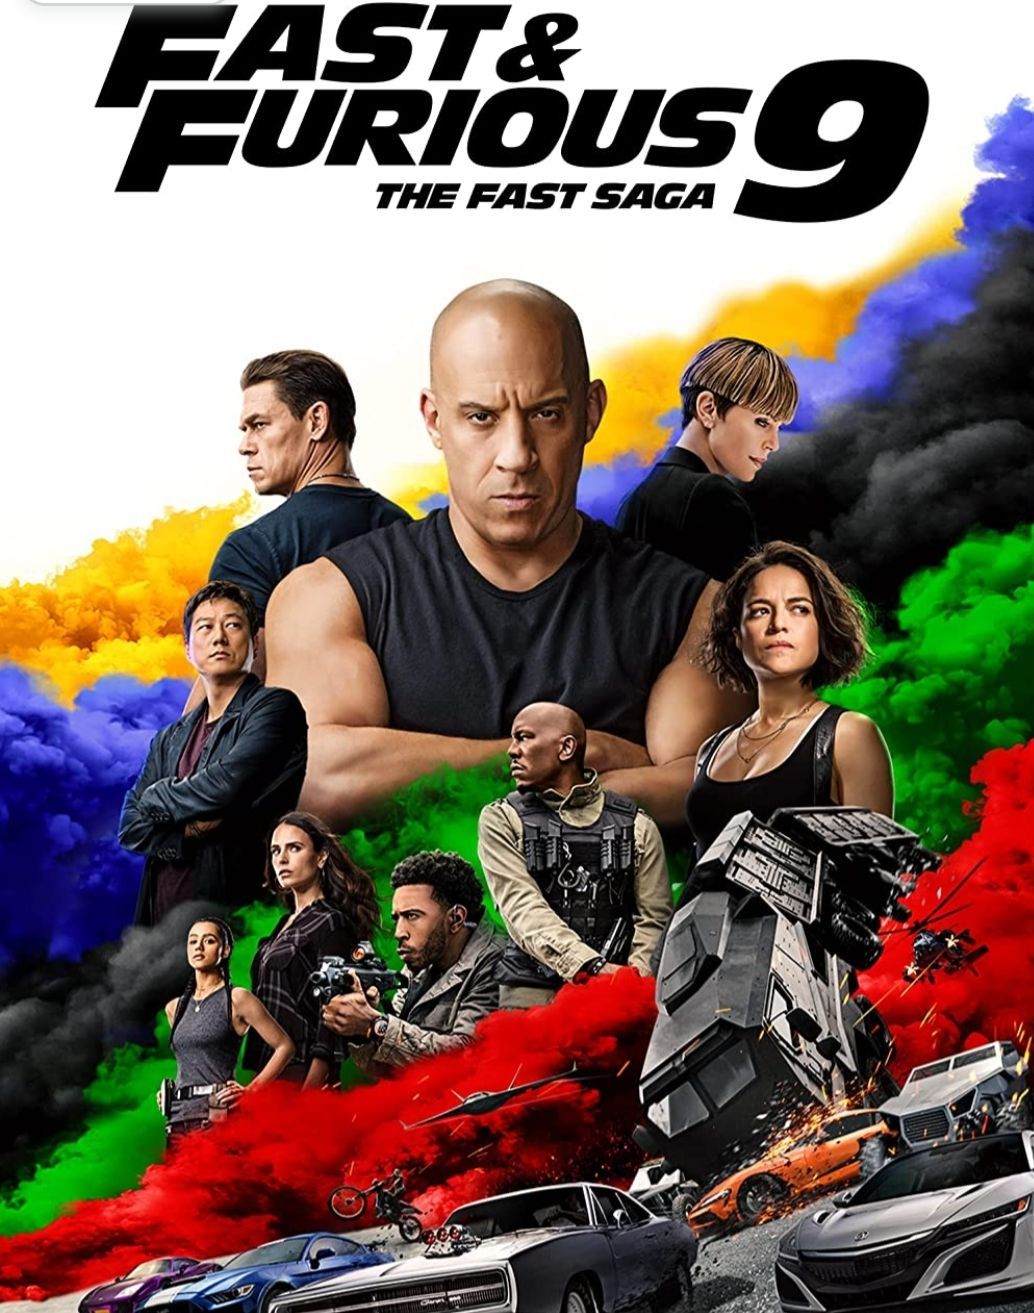 Fast And Furious 9 The Fast Saga | เร็ว แรงทะลุนรก 9 (2021)